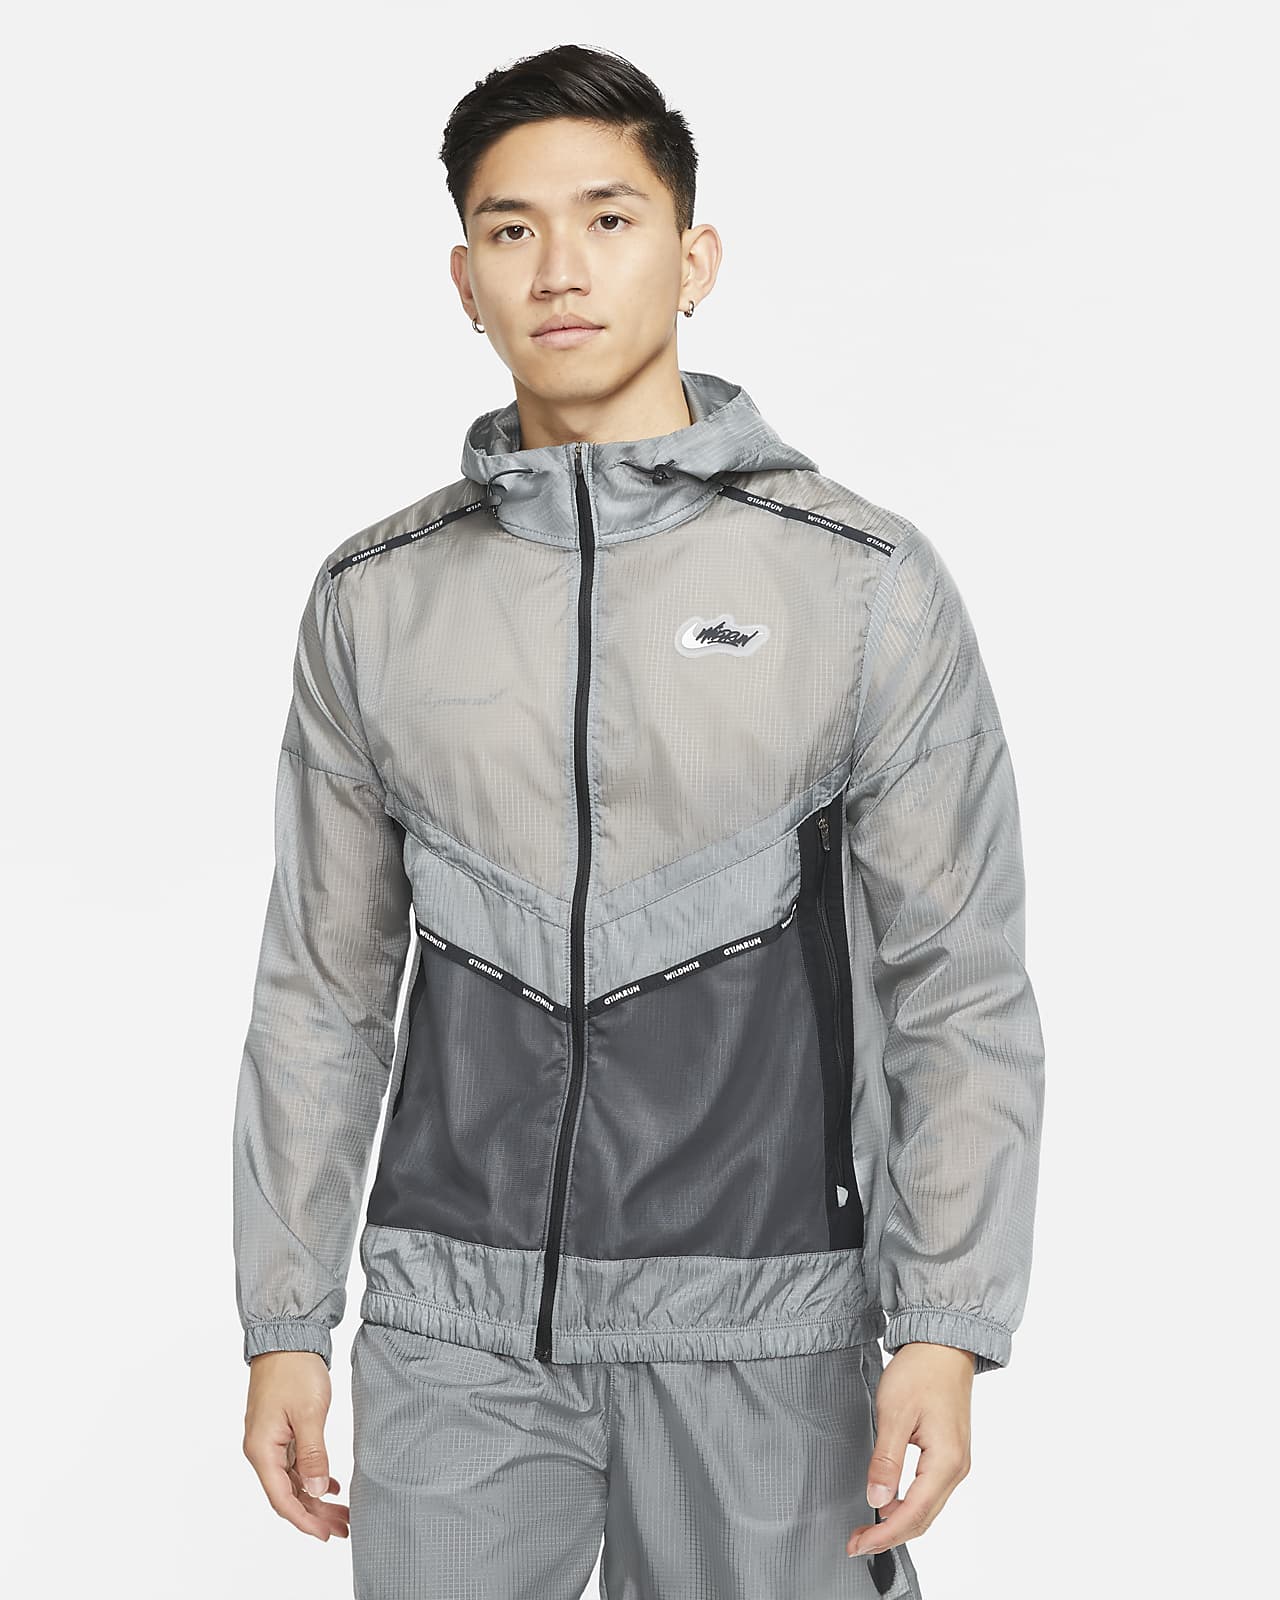 Nike Repel Wild Run Windrunner Men's Graphic Running Jacket